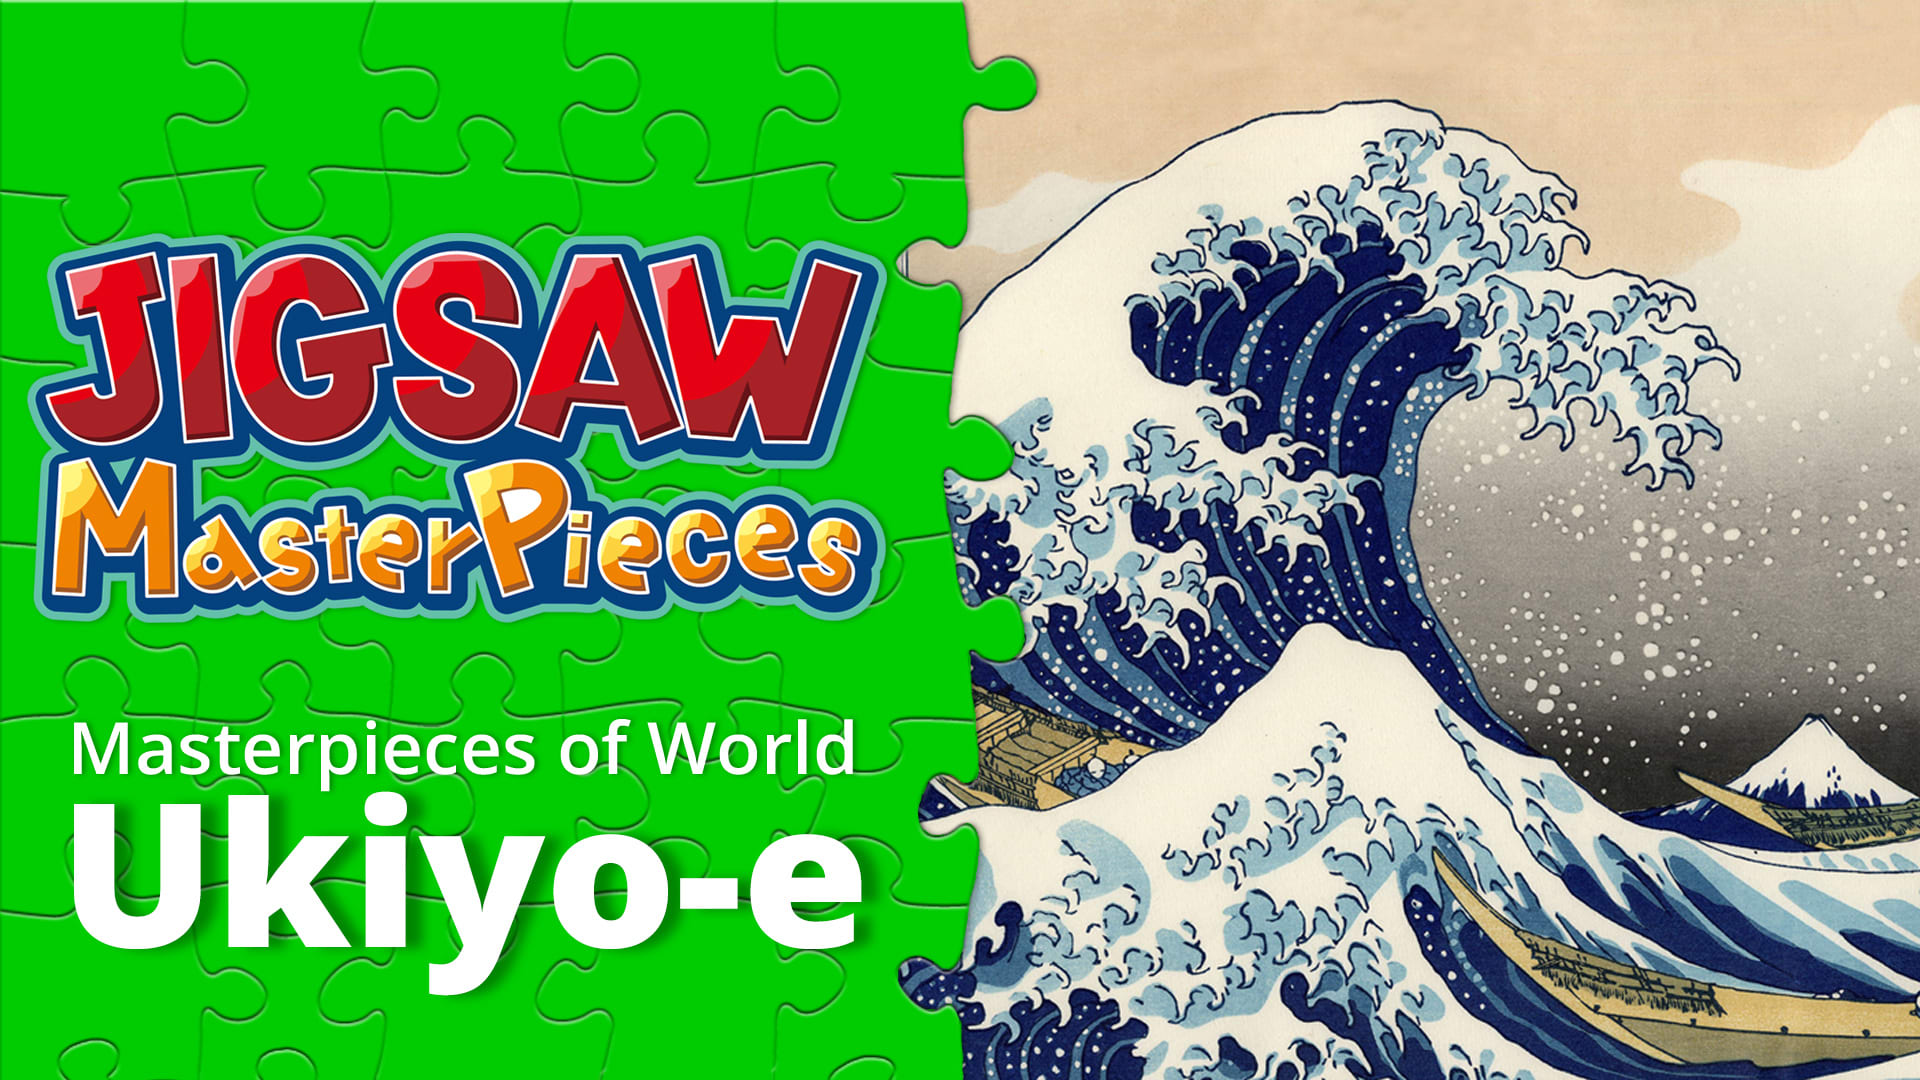 Masterpieces of World  - Ukiyo-e -